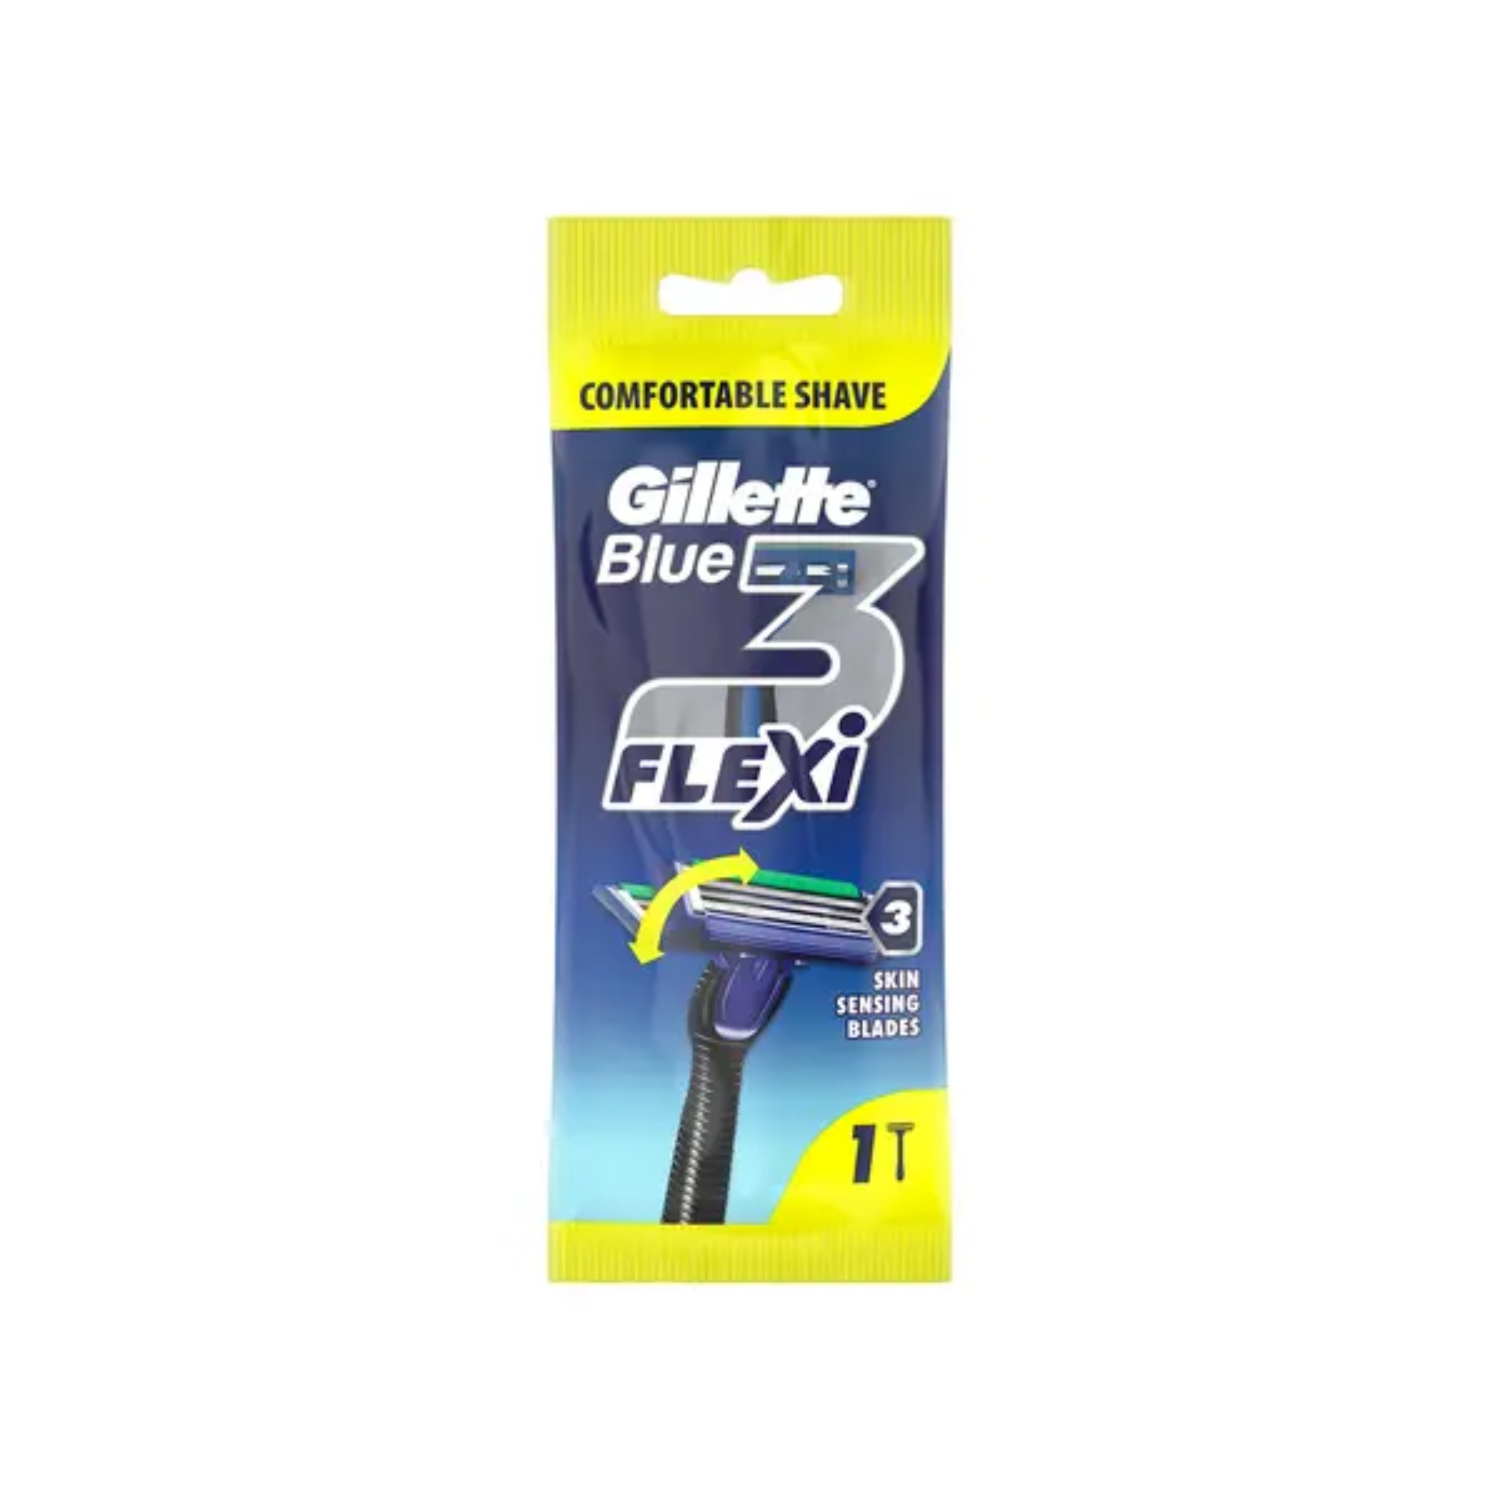 gillette-blue-3-flexi-skin-sensing-blades-razor-1pcs